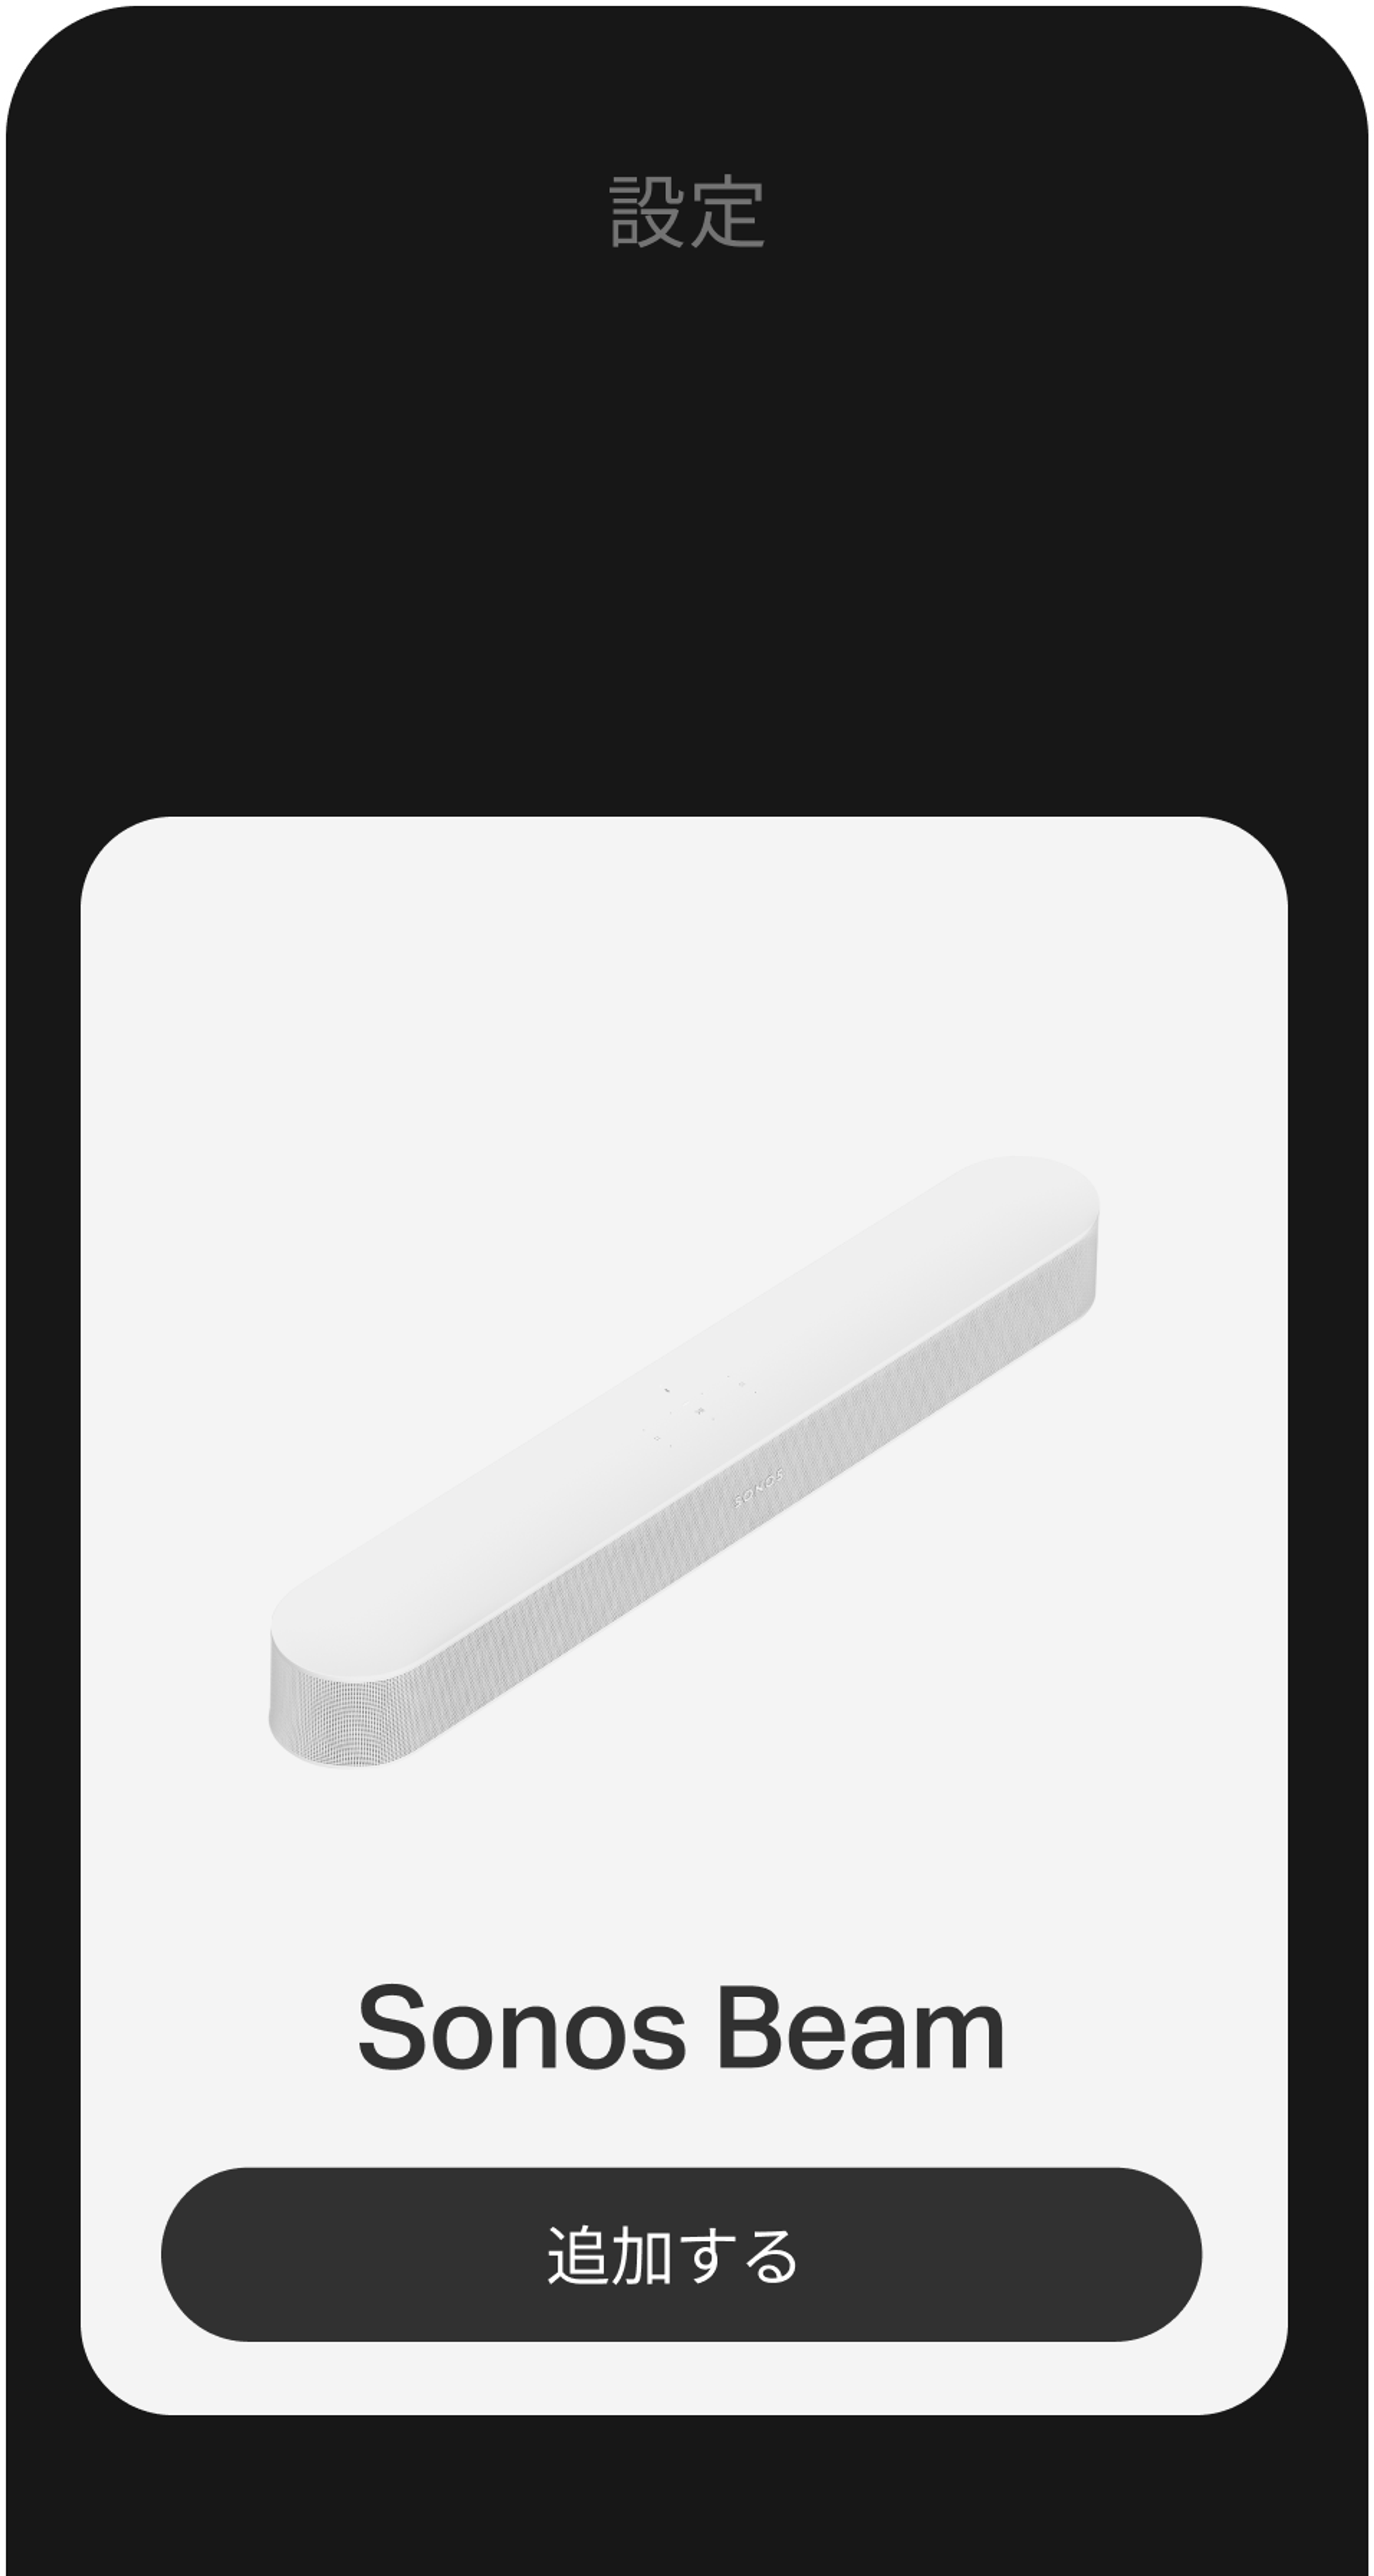 Sonosアプリを使った設定手順が表示されるスマートフォン